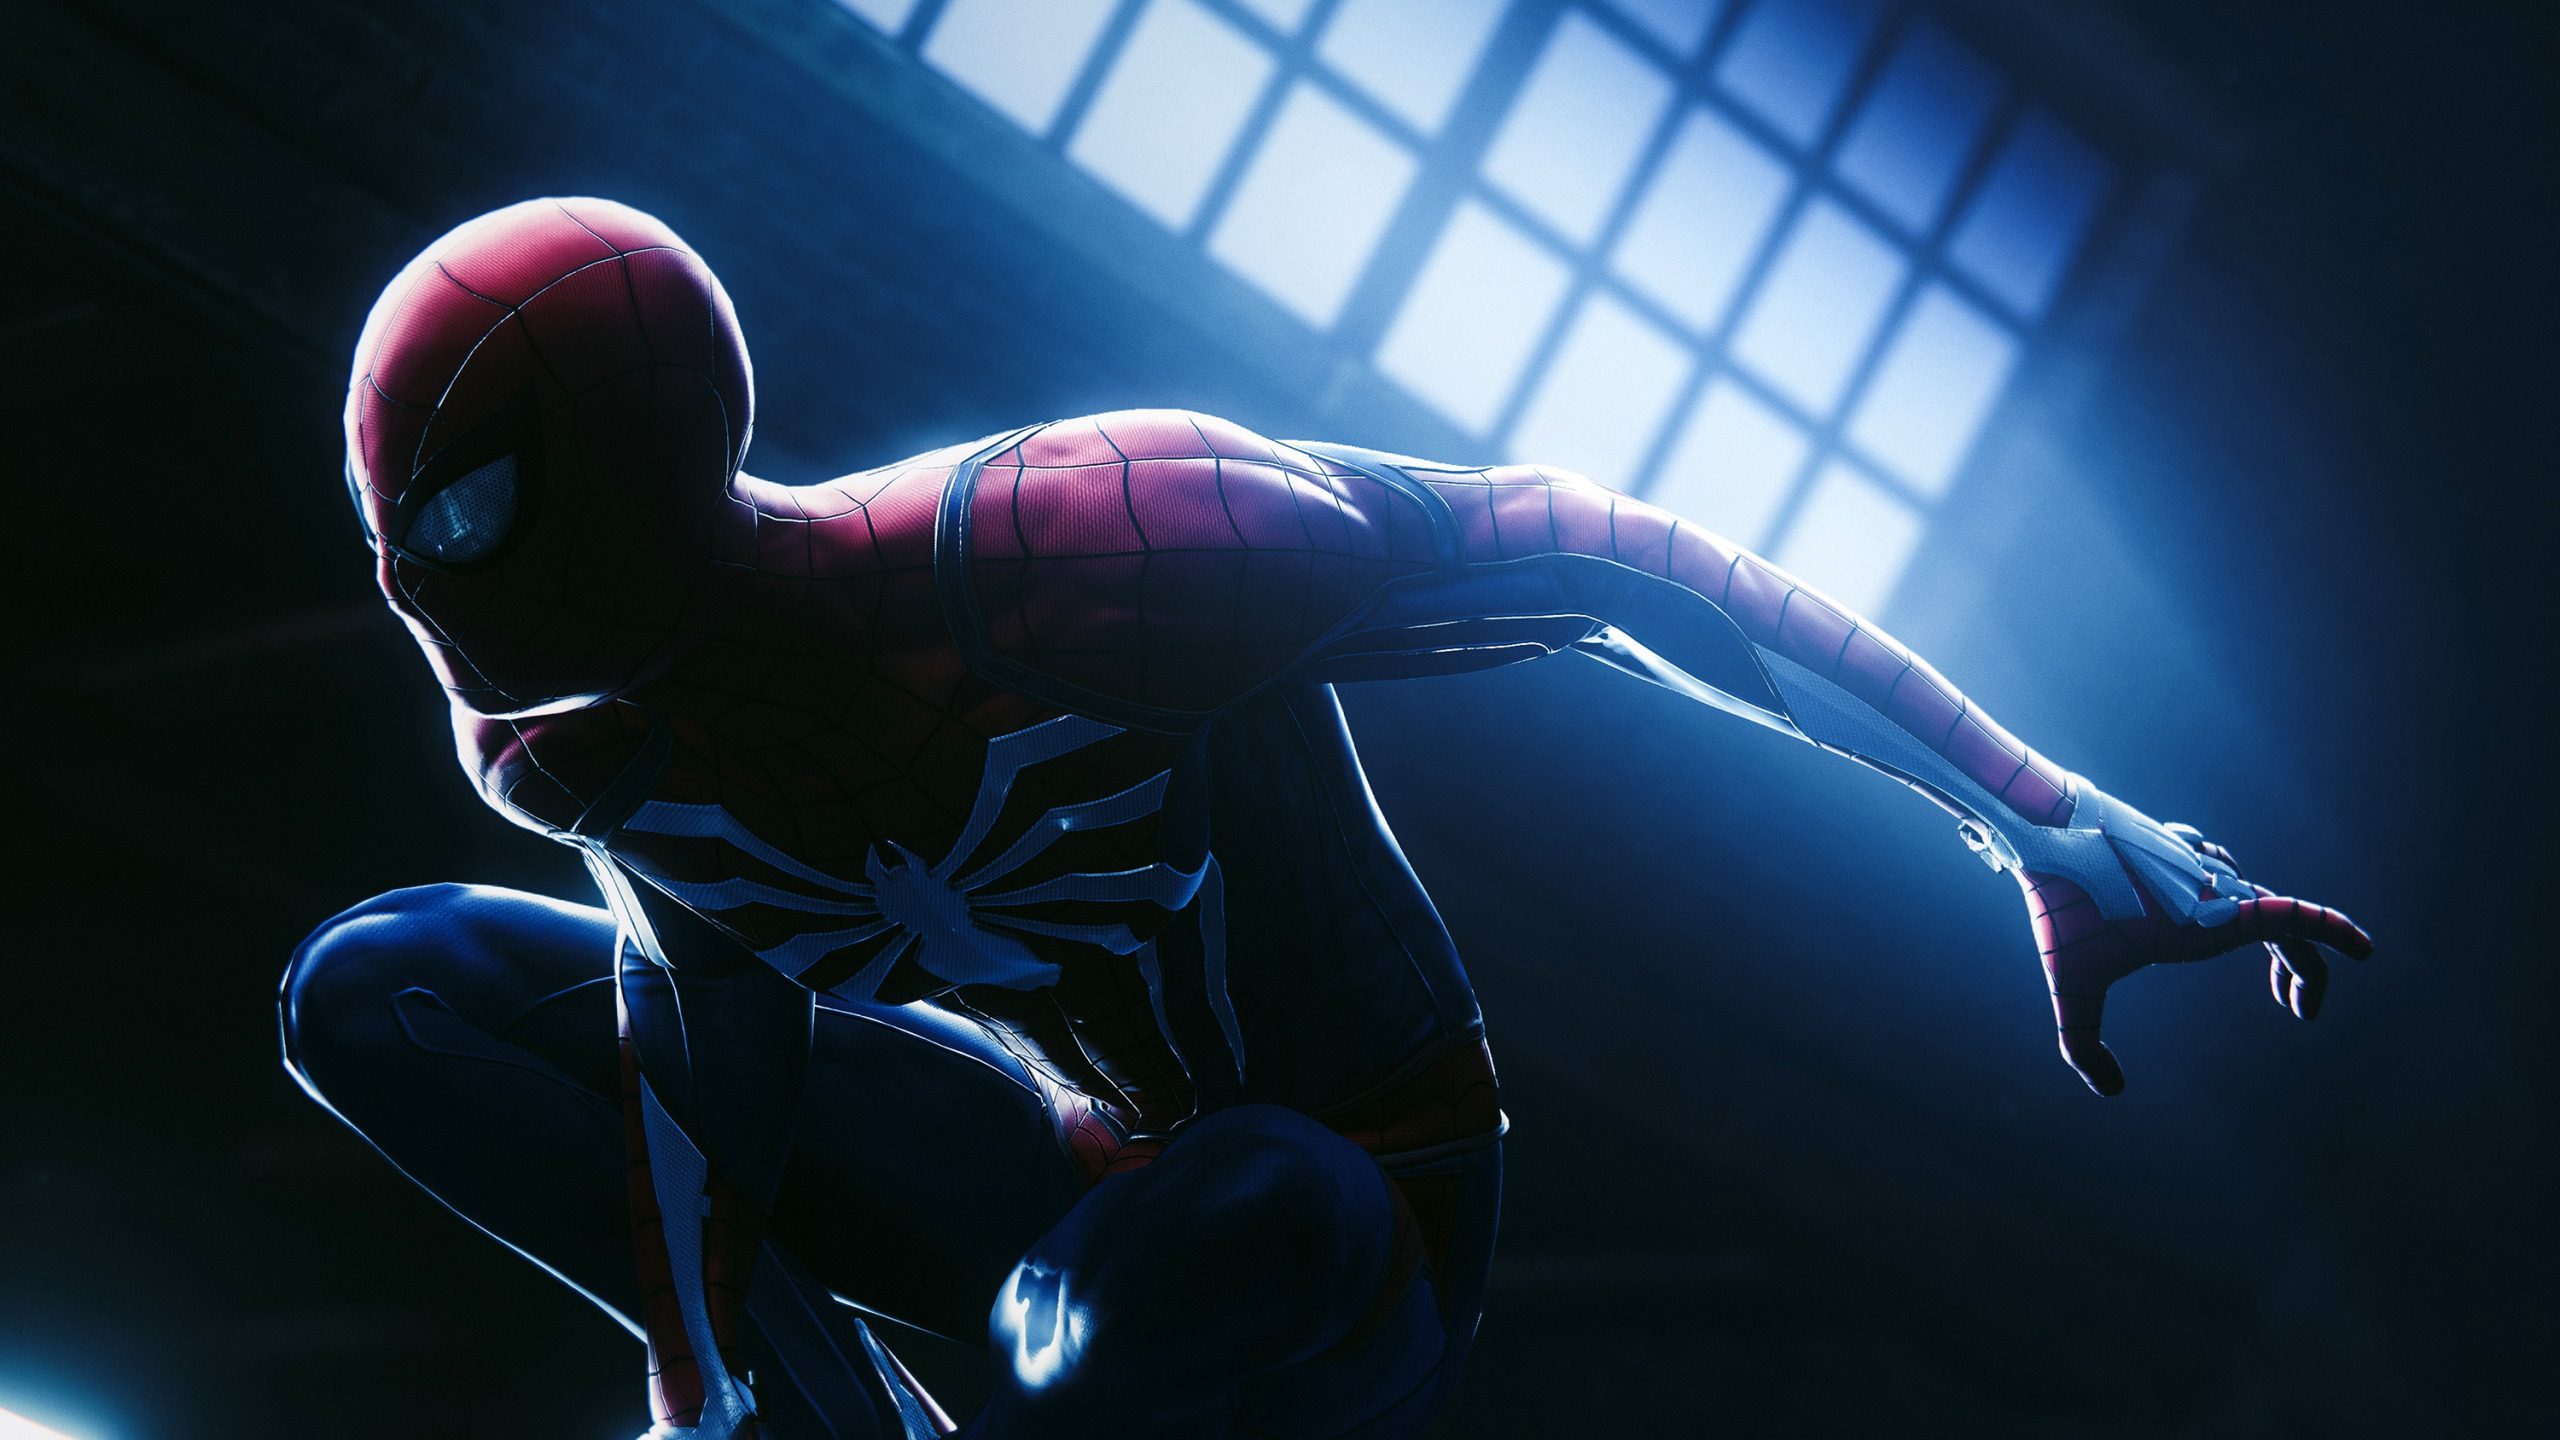 Spider man ps4 Юри. Марвел человек паук. Spider-man (игра, 2018). Человек паук 4 Марвел. Расширенная версия человека паука